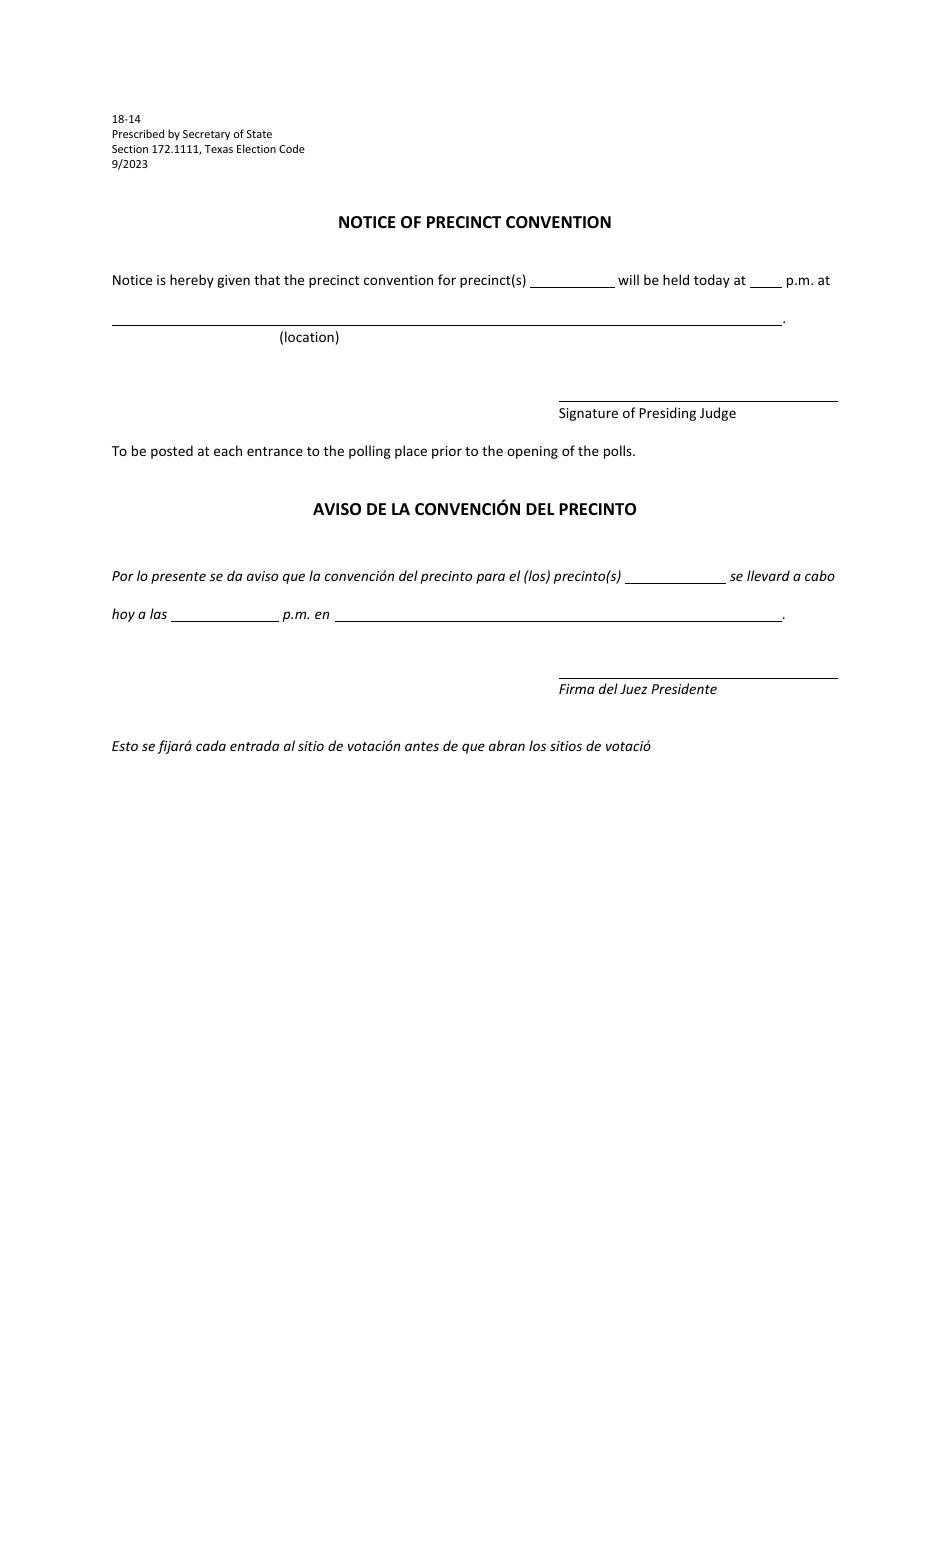 Form 18-14 Notice of Precinct Convention - Texas (English / Spanish), Page 1